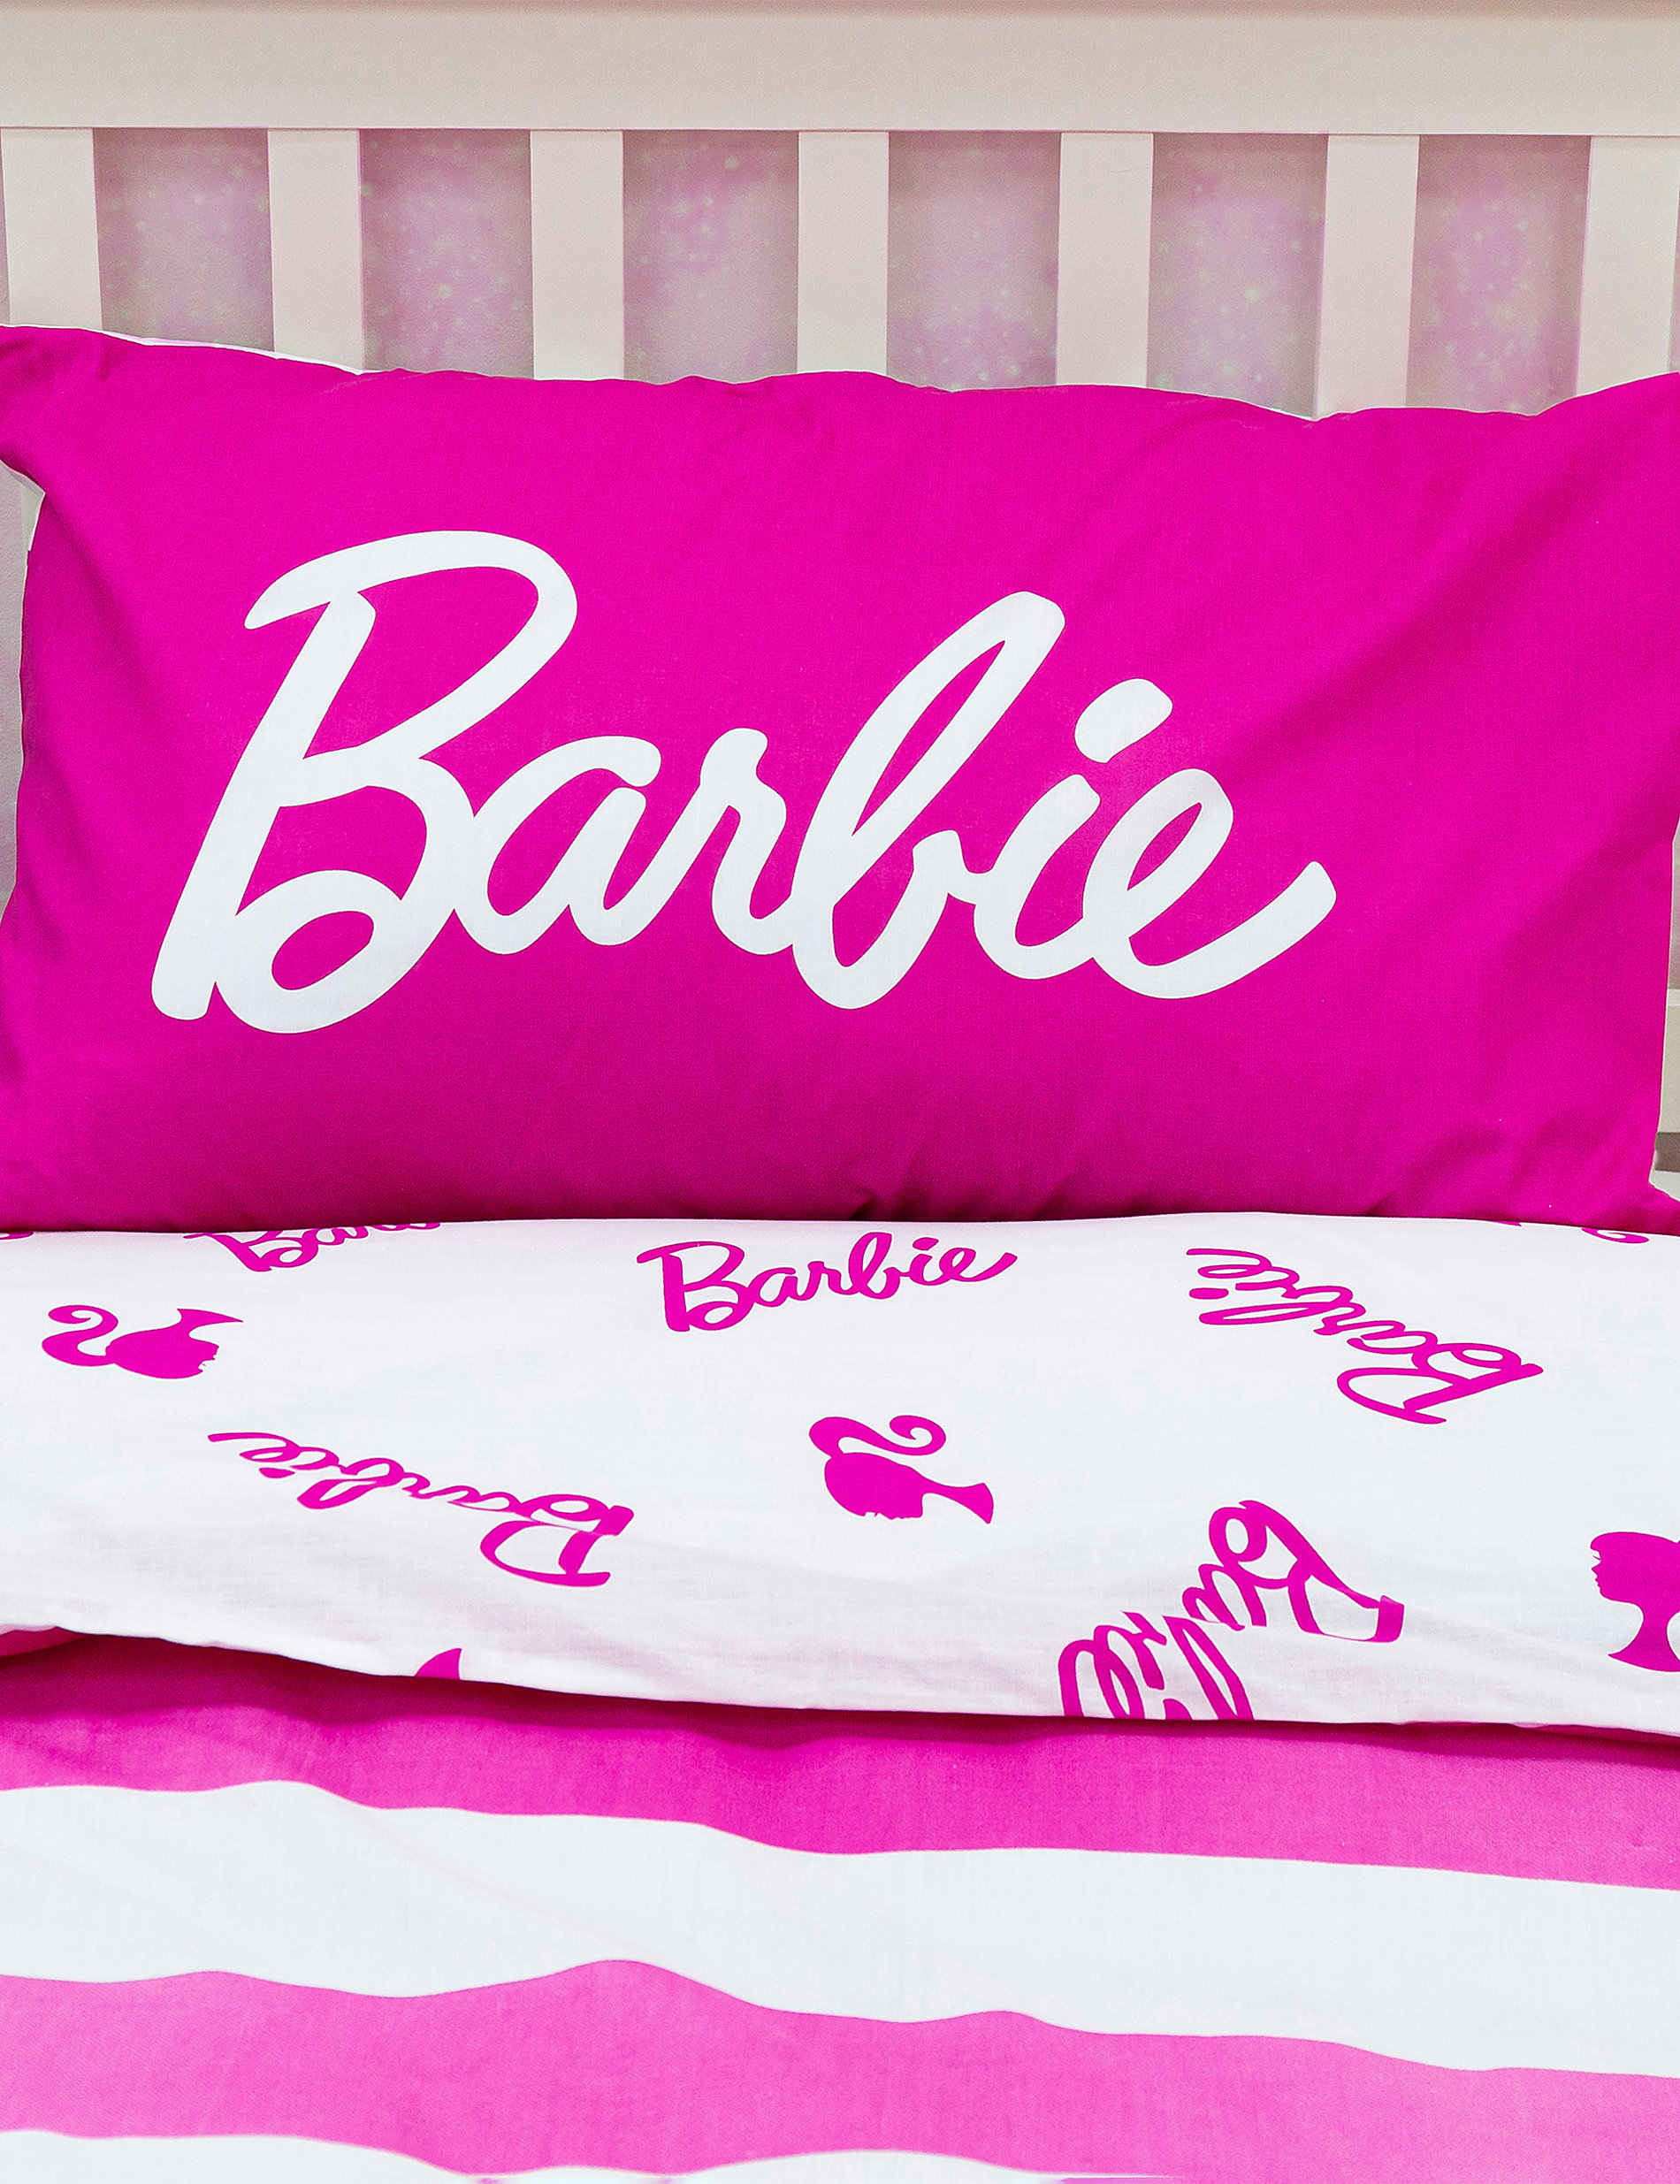 Cotton Blend Barbie™ Single Bedding Set